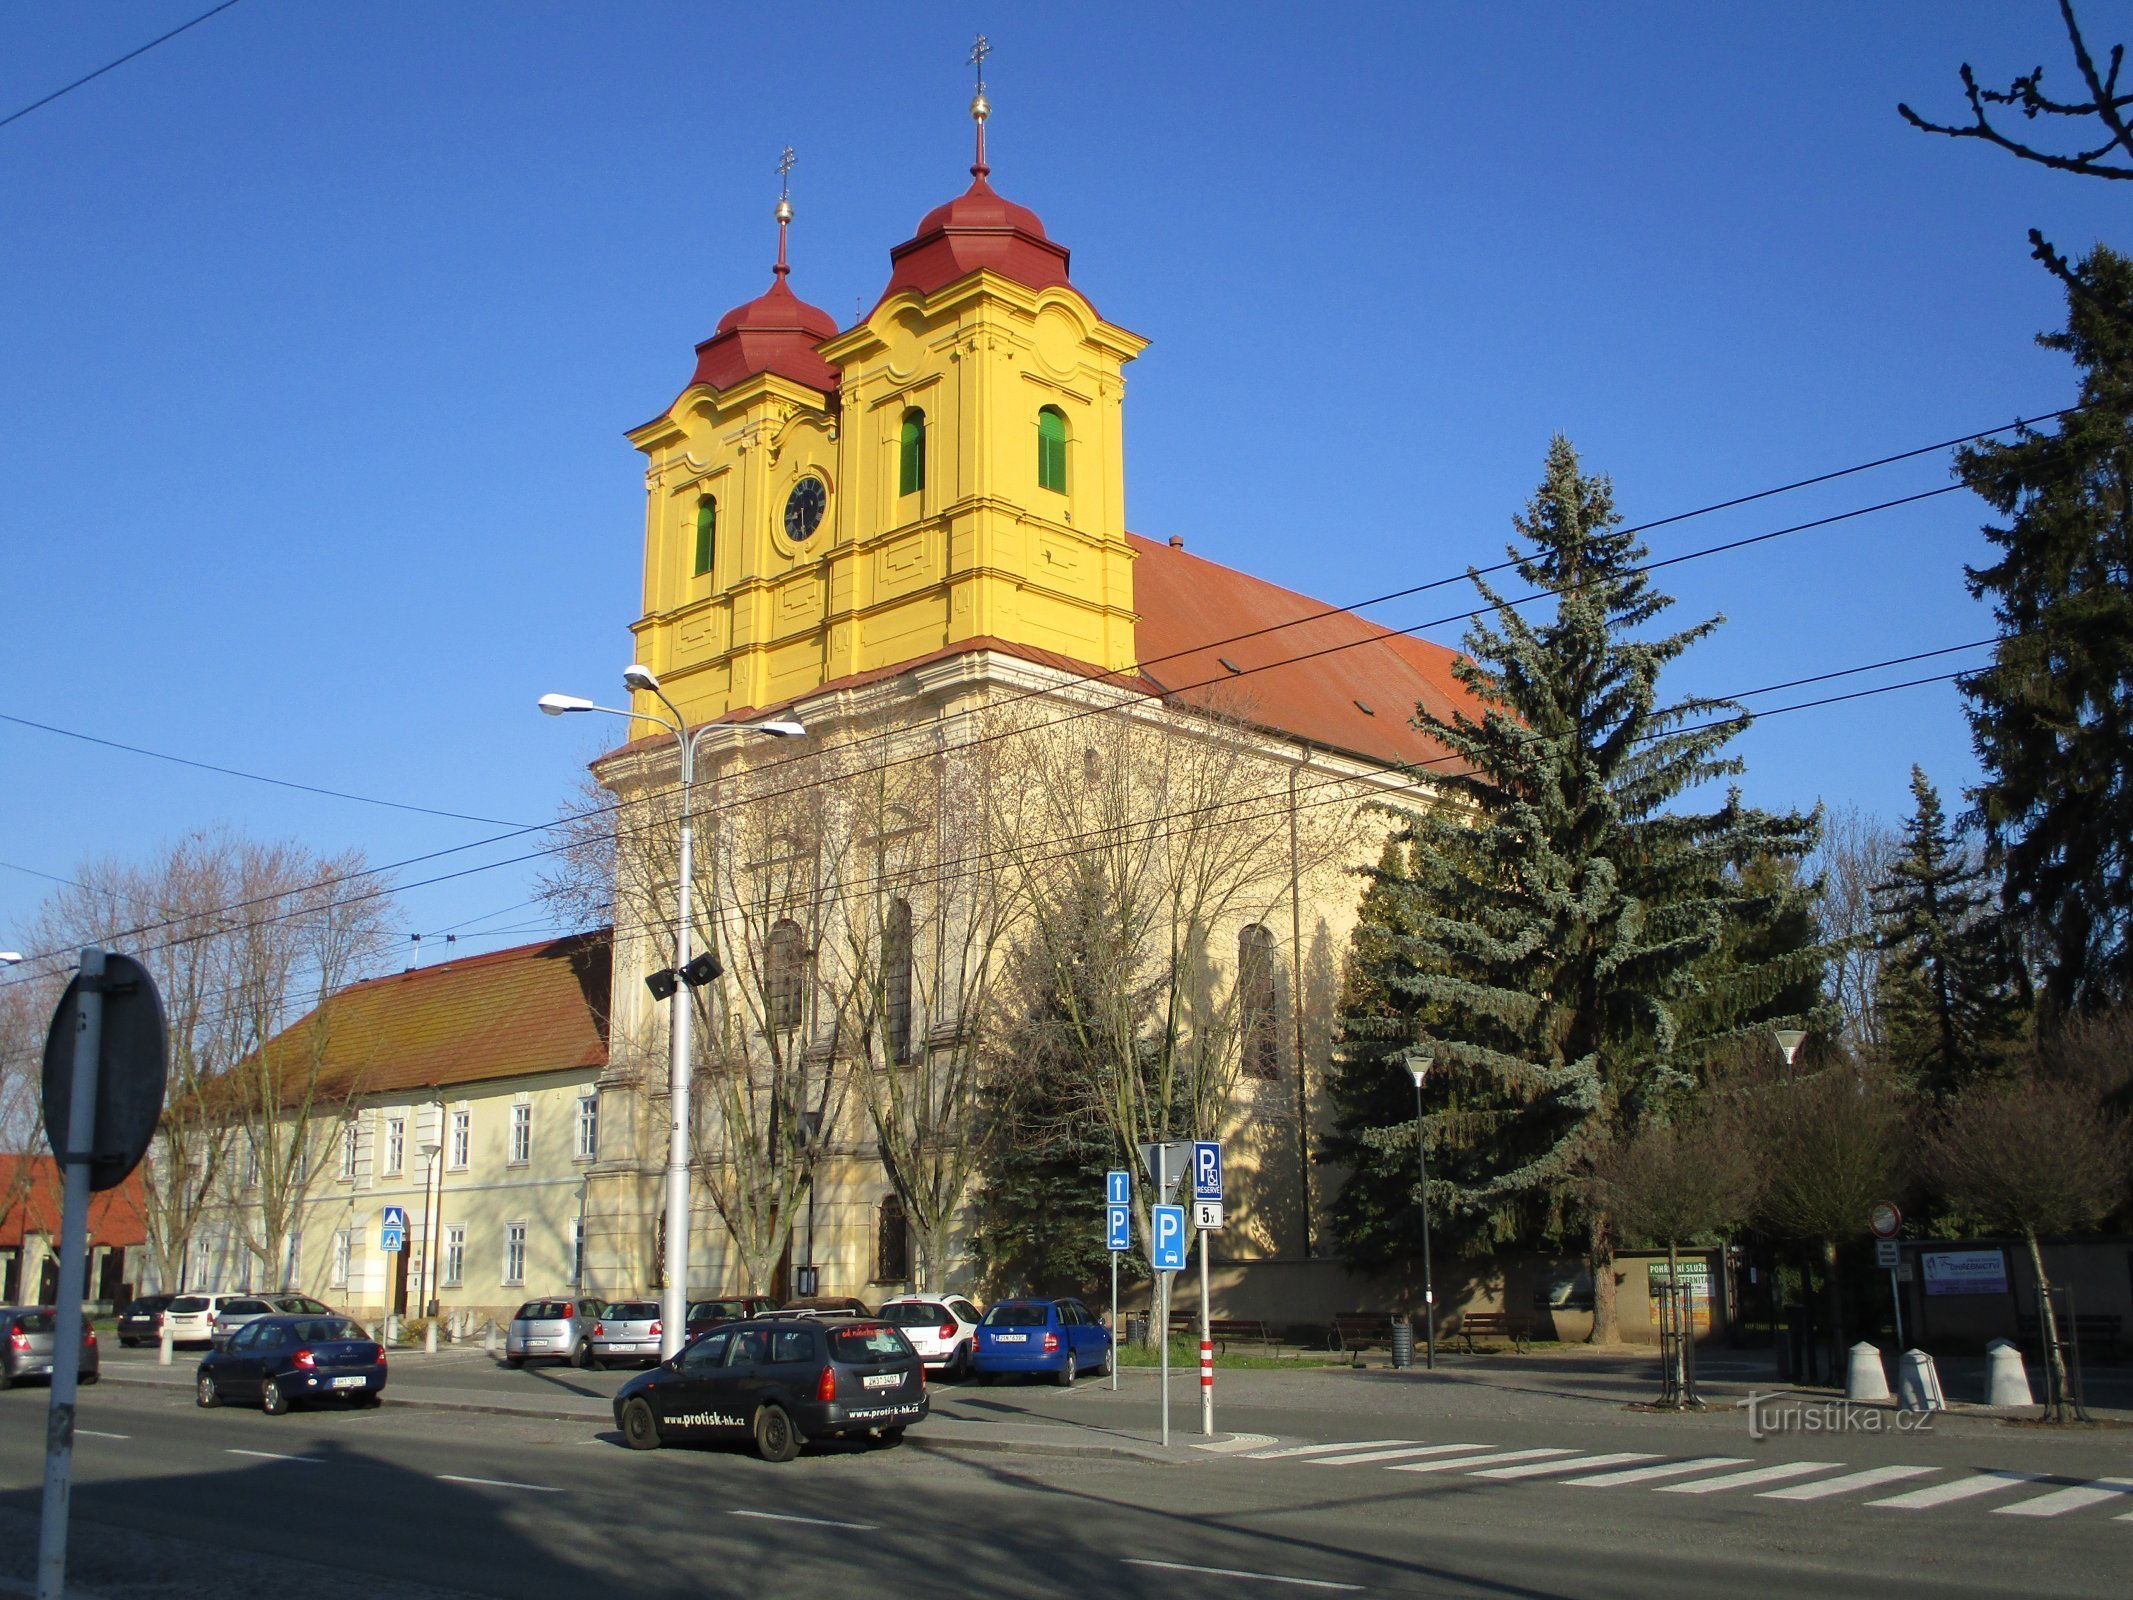 Церковь св. Анни (Градец Кралове, 5.4.2020 апреля XNUMX г.)